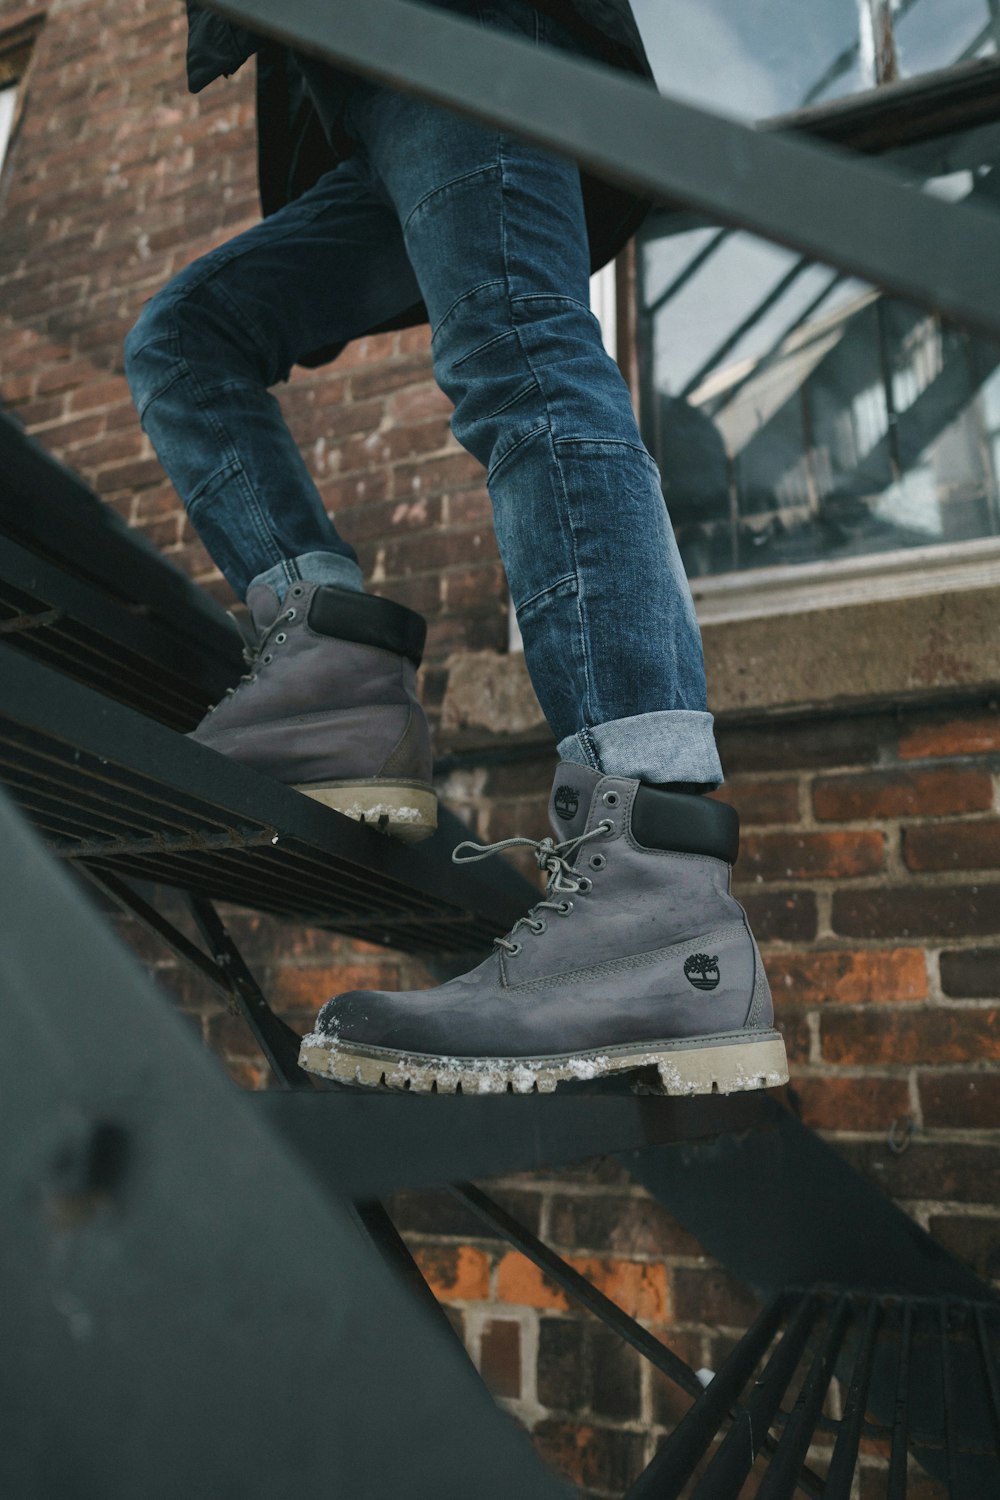 Person wearing gray timberland work boots climbing on black stairs photo Free La crosse Image on Unsplash